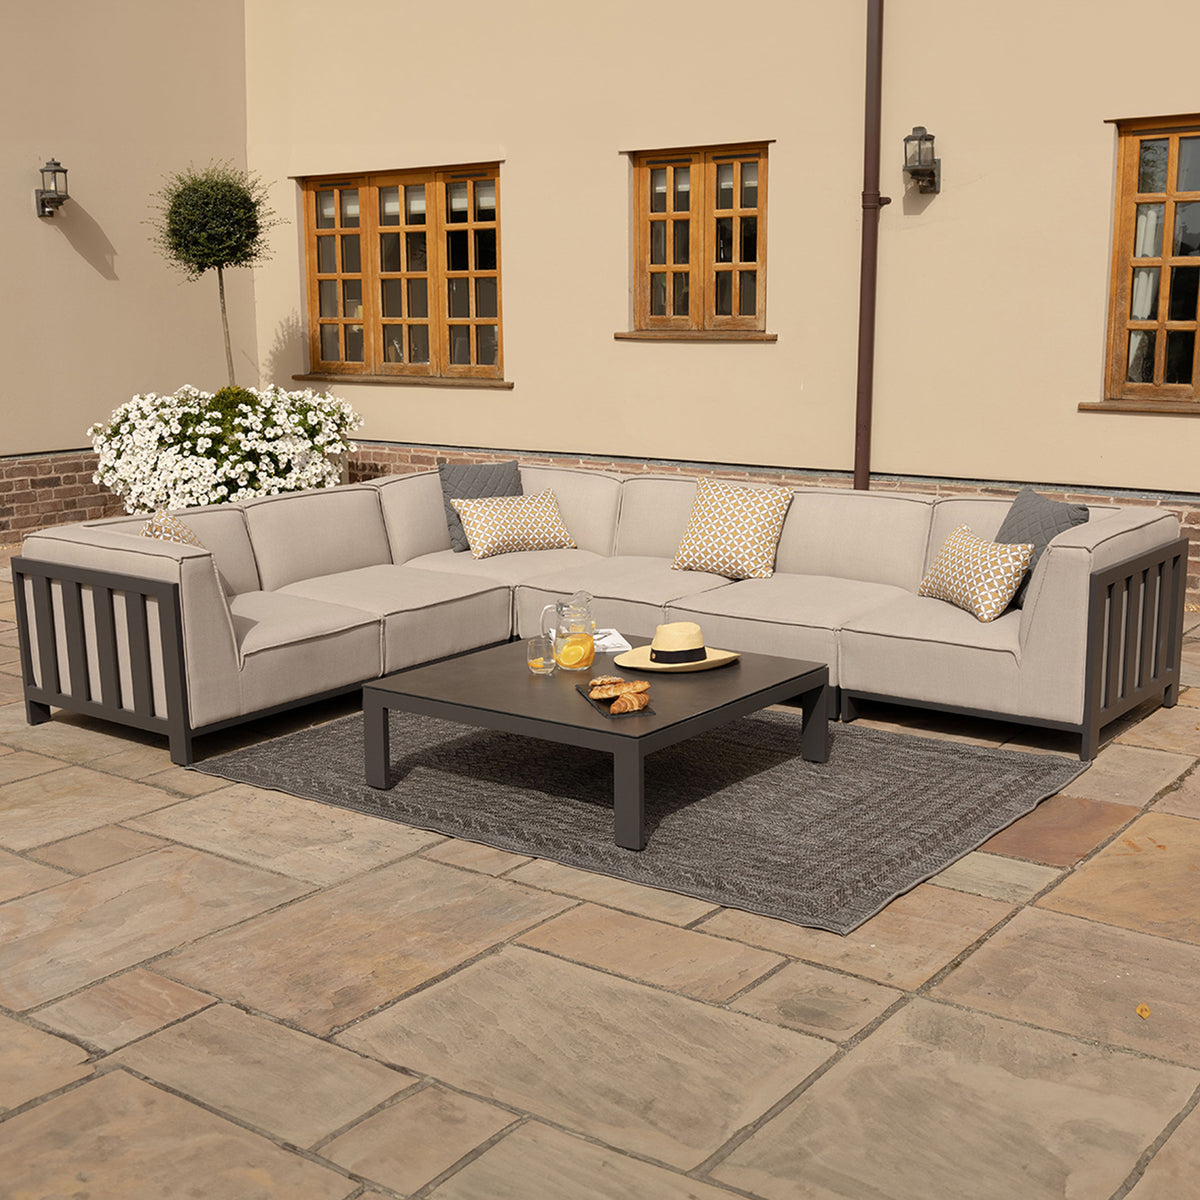 Maze Ibiza Outdoor Medium Corner Sofa Set With Square Table from Roseland Furniture